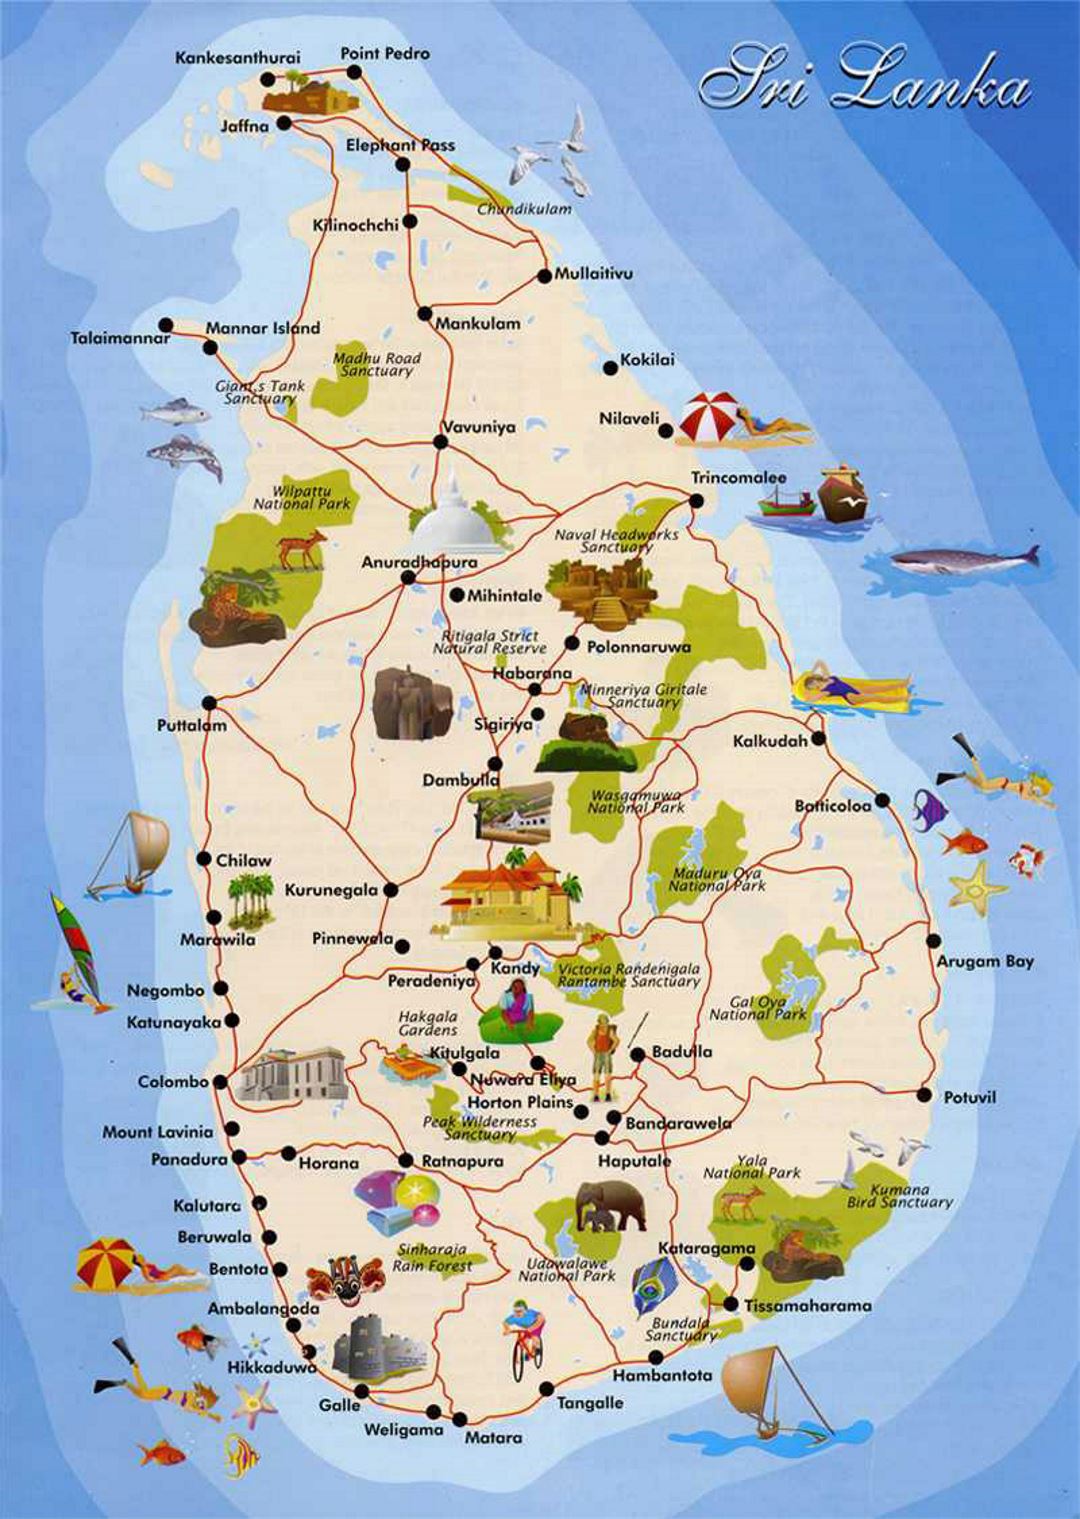 Detailed tourist map of Sri Lanka | Sri Lanka | Asia | Mapsland | Maps